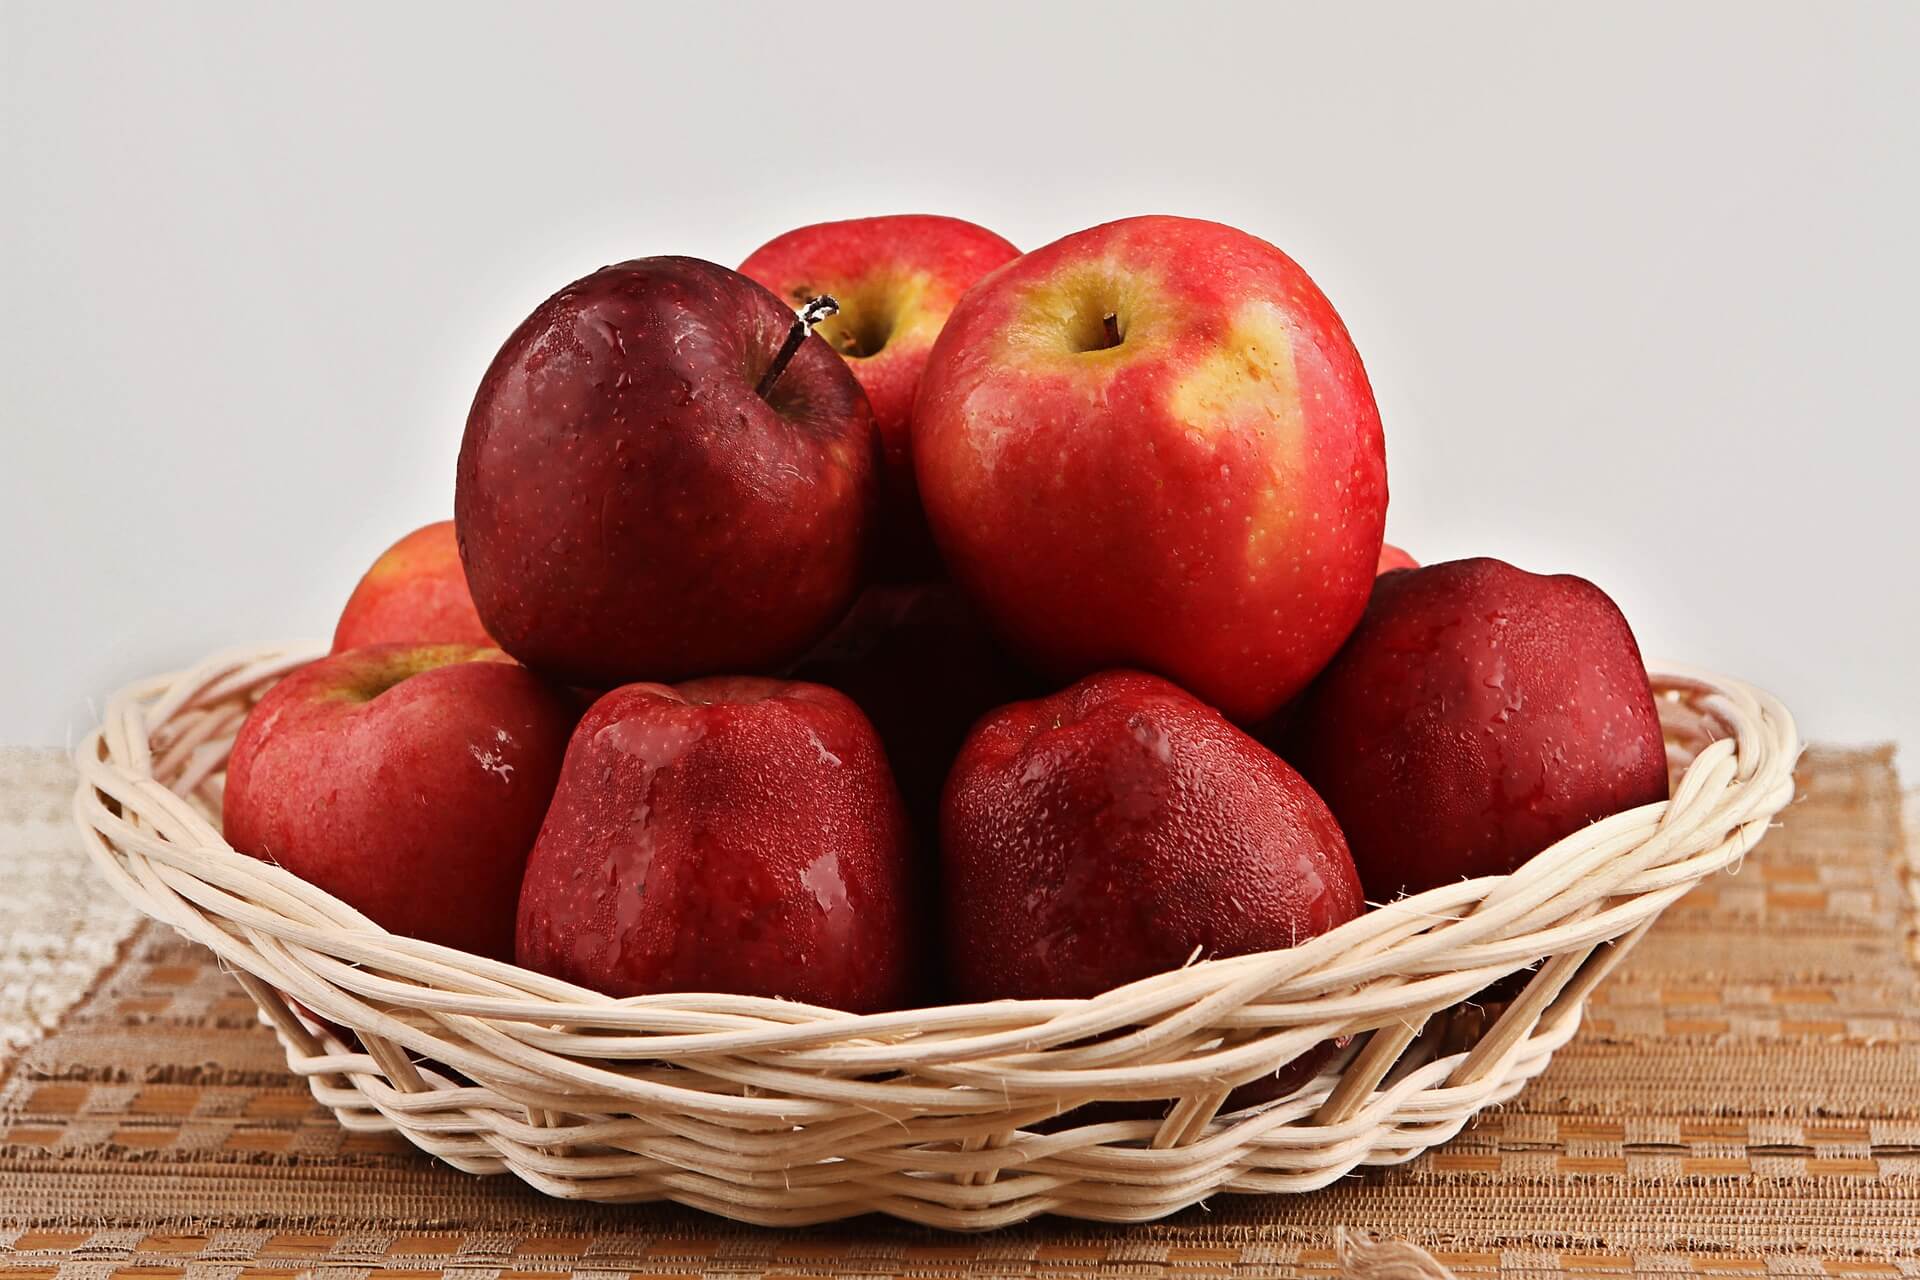 Apples to help combat constipation